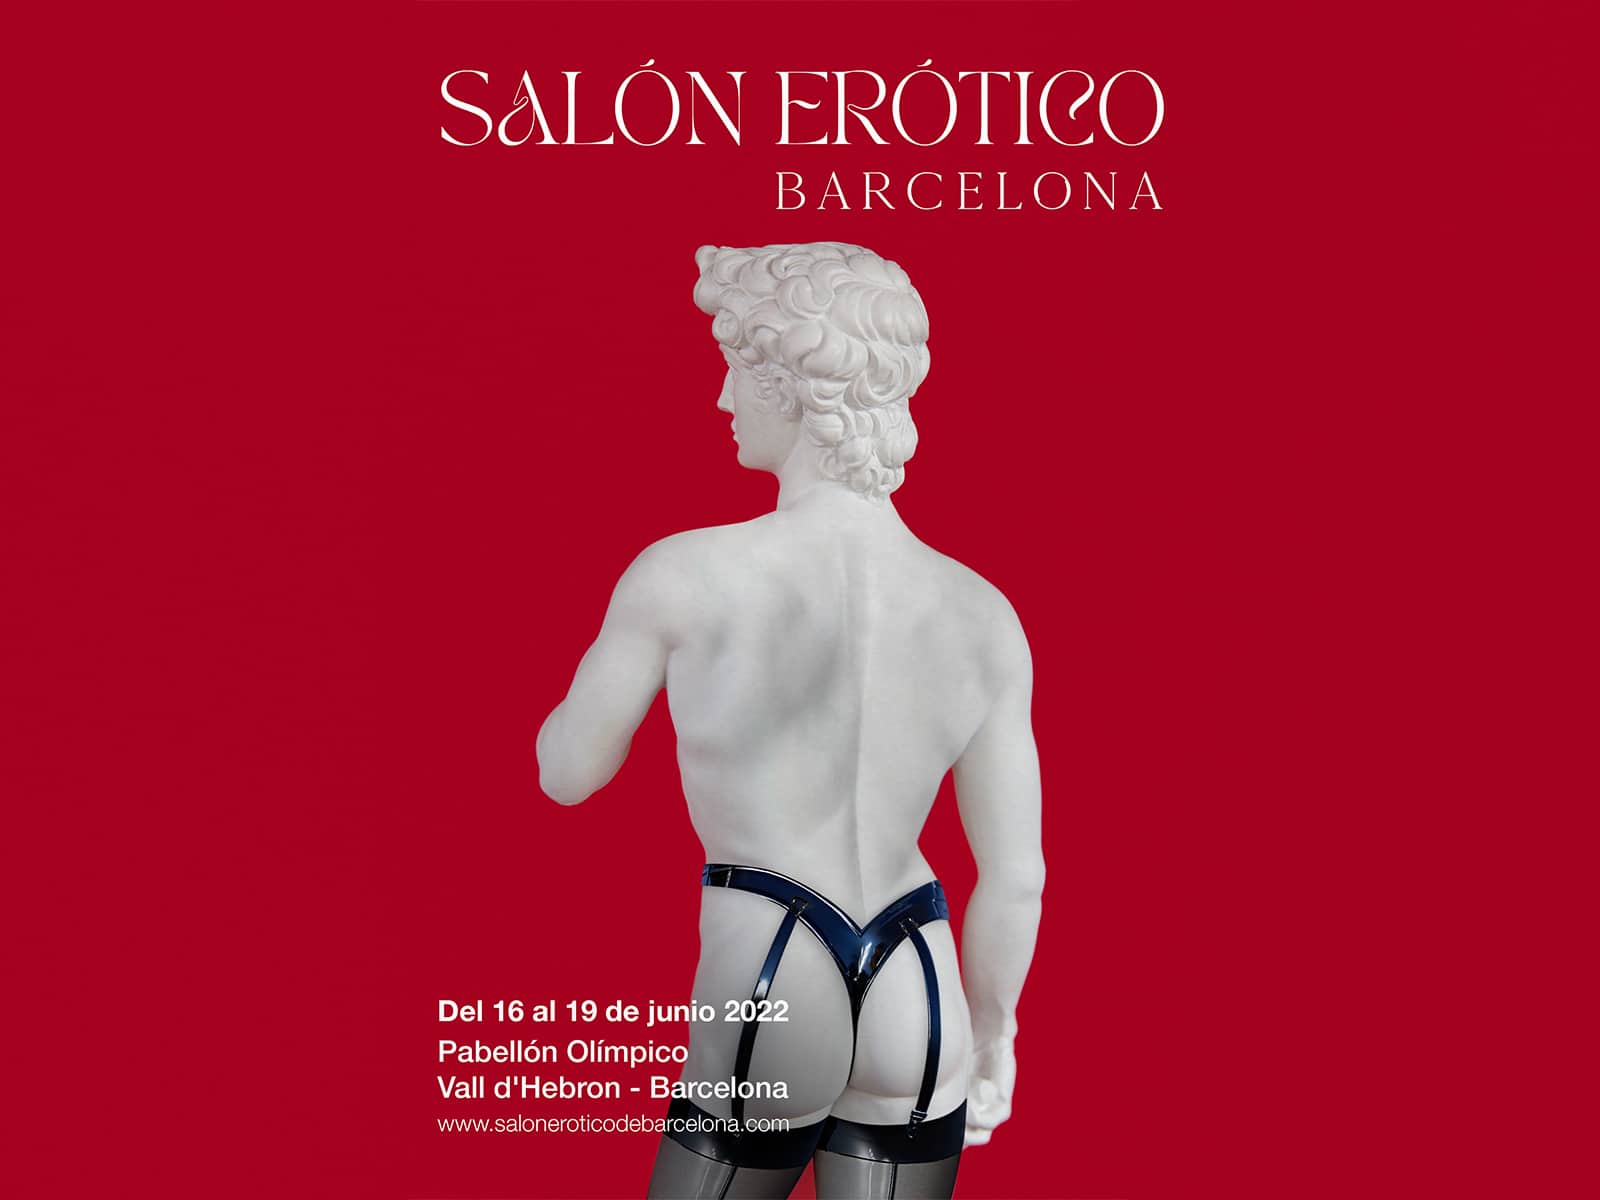 The Barcelona Erotic Salon returns after three years